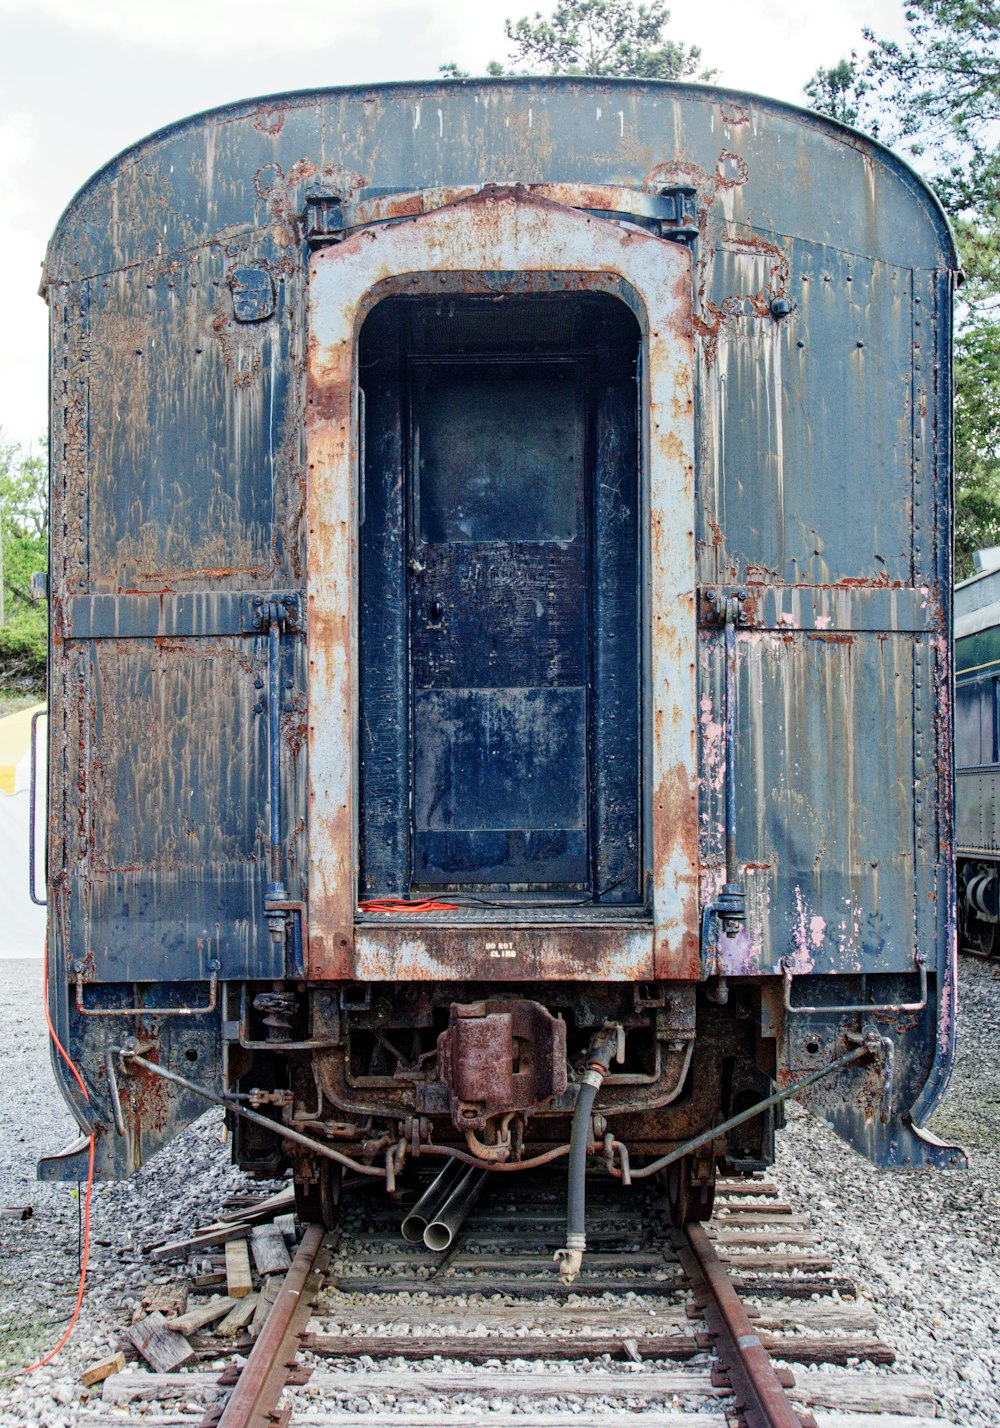 an old rusty train car sitting on the tracks